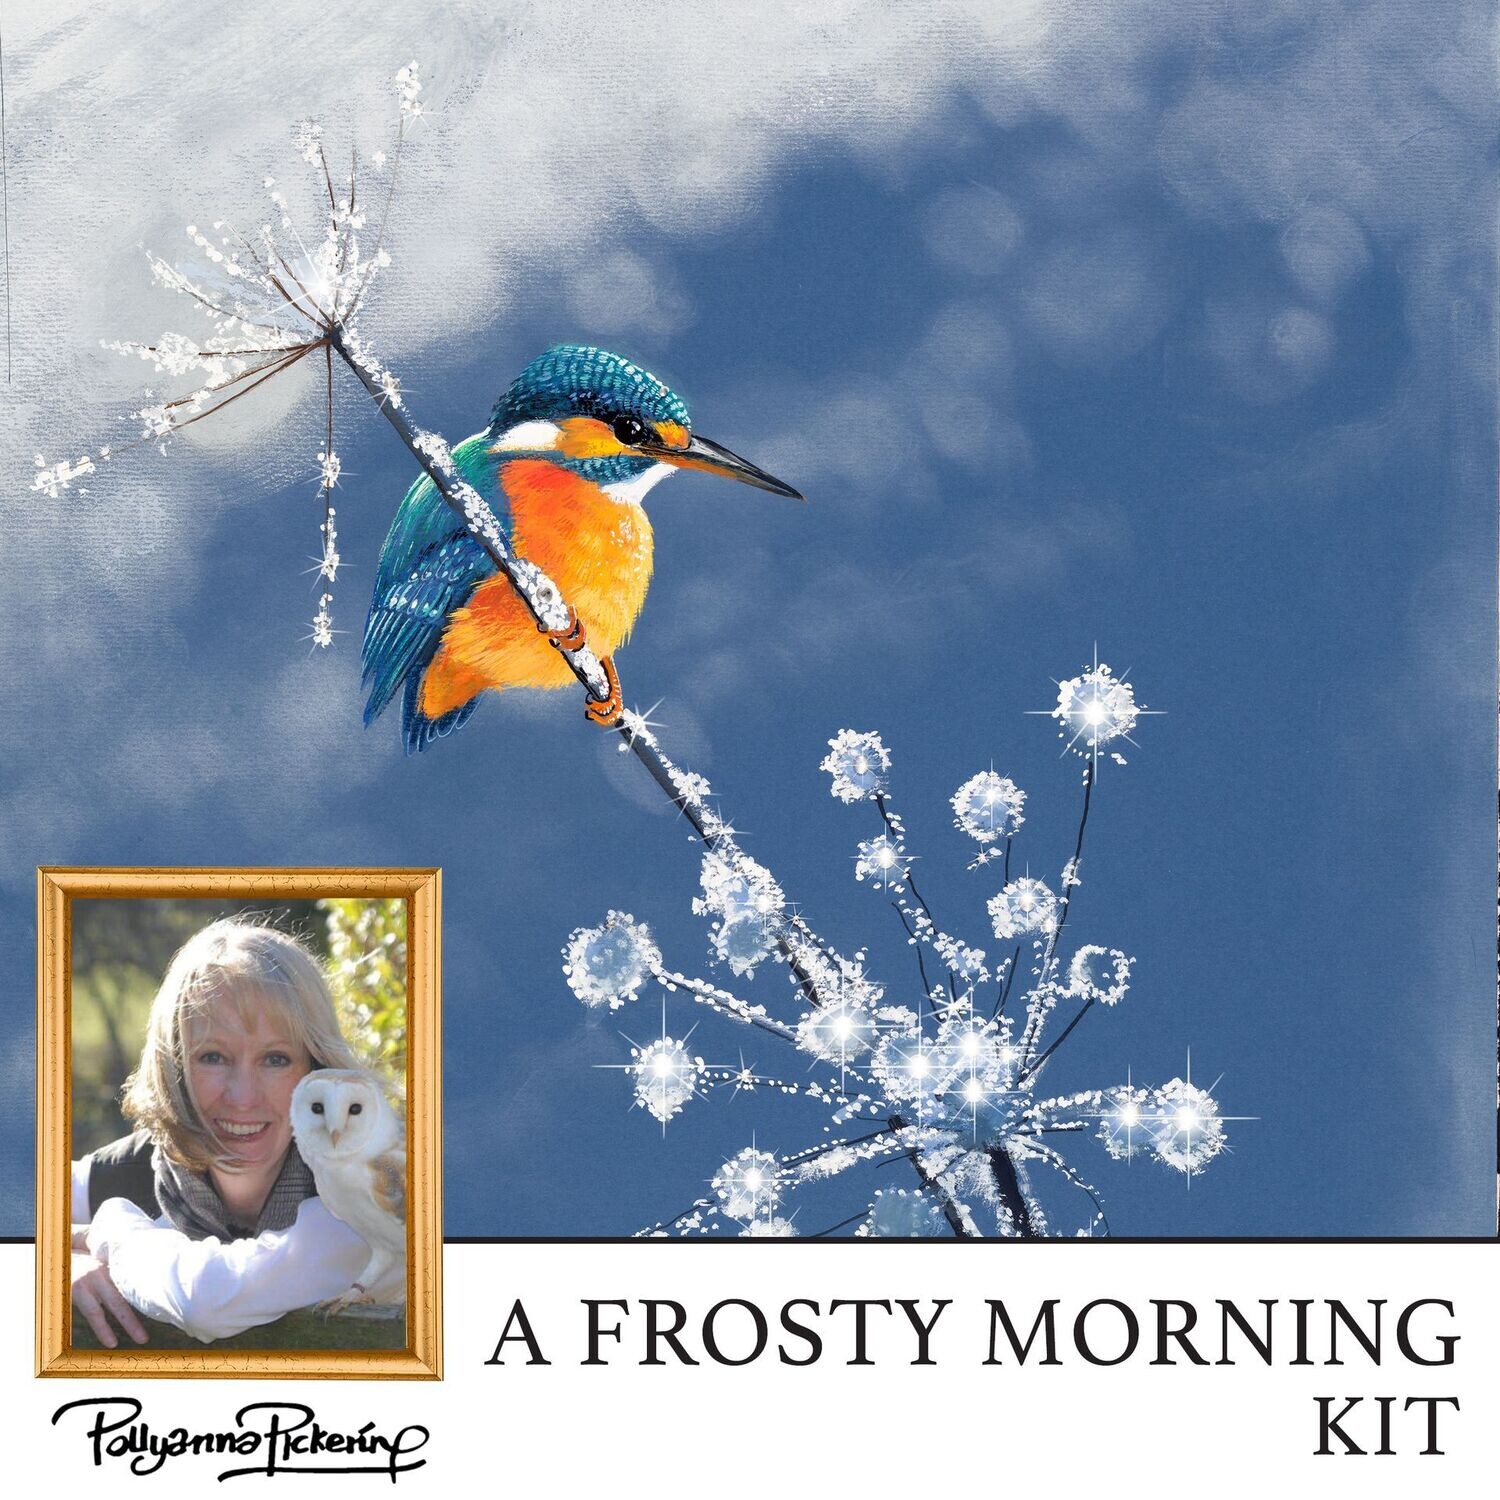 Pollyanna Pickering's A Frosty Morning Digital Kit